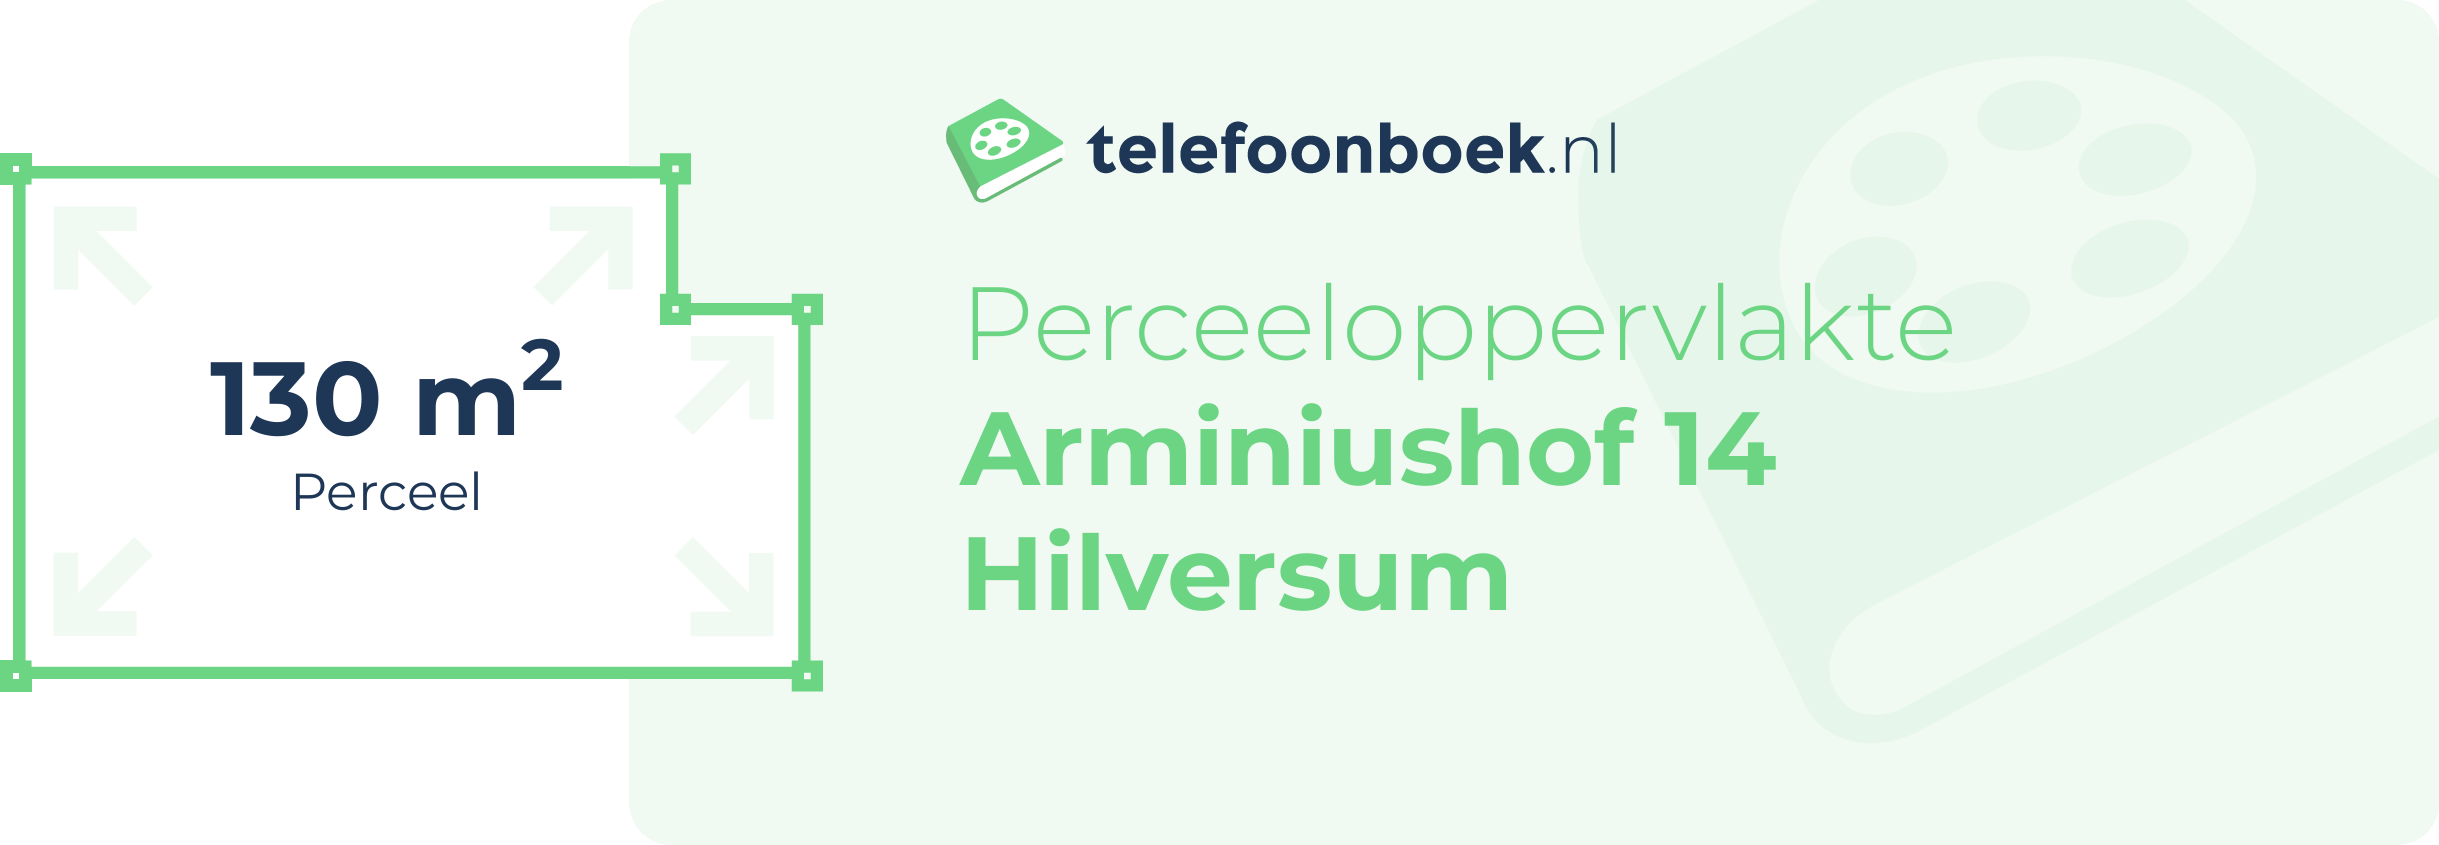 Perceeloppervlakte Arminiushof 14 Hilversum